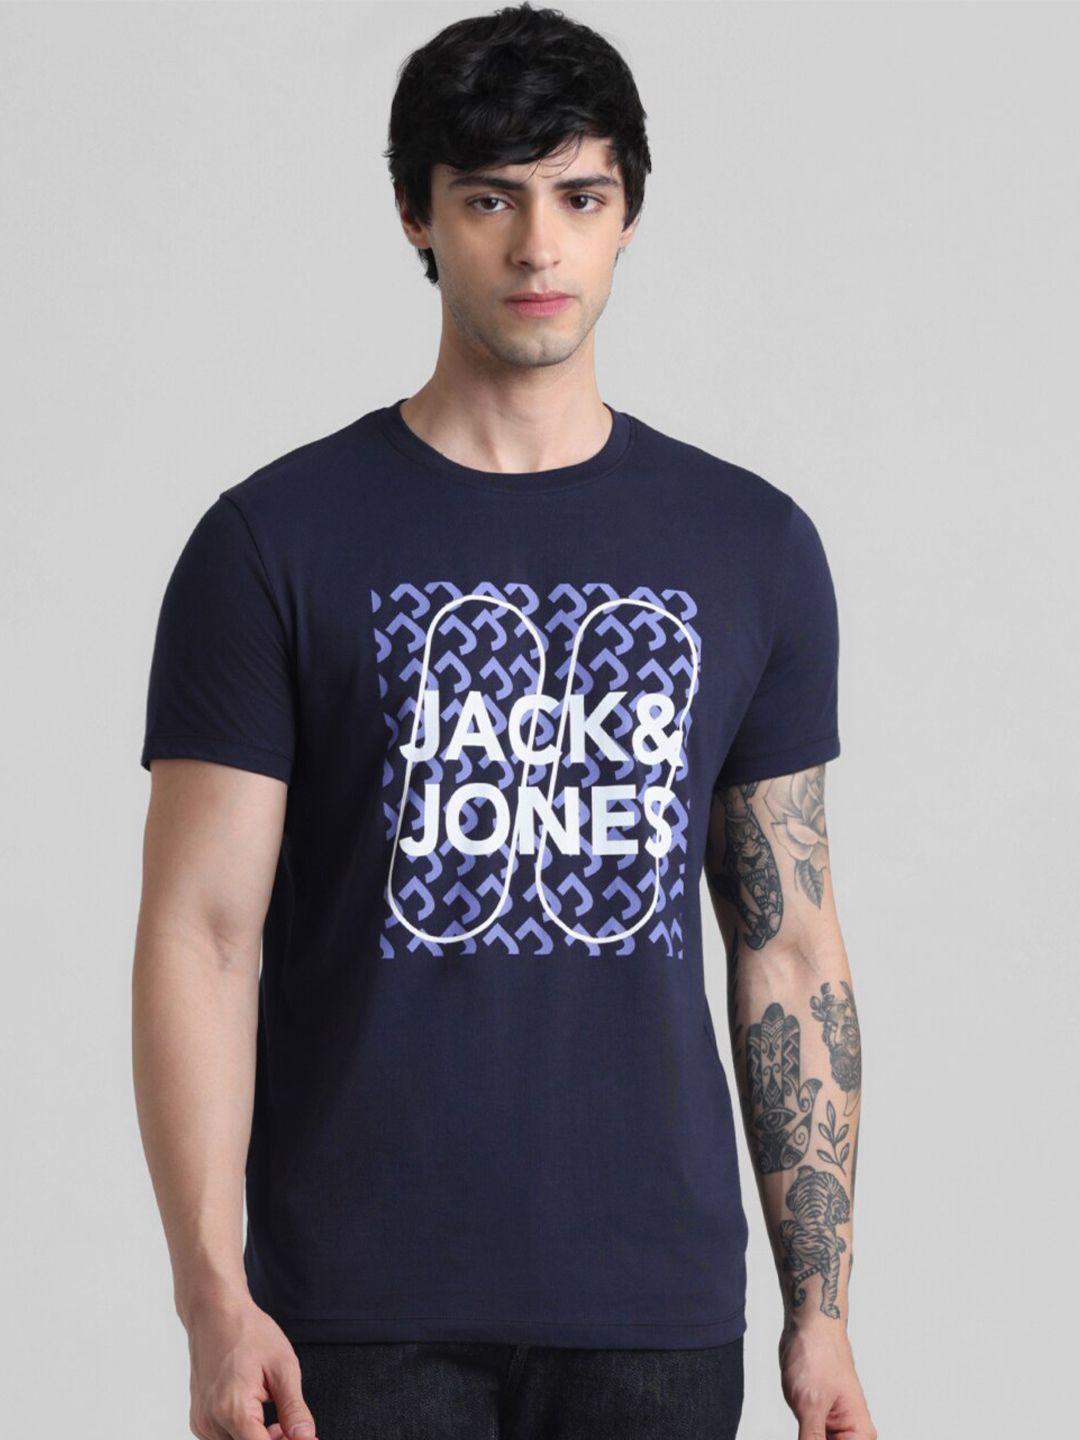 jack & jones typography printed round neck pure cotton slim fit t-shirt